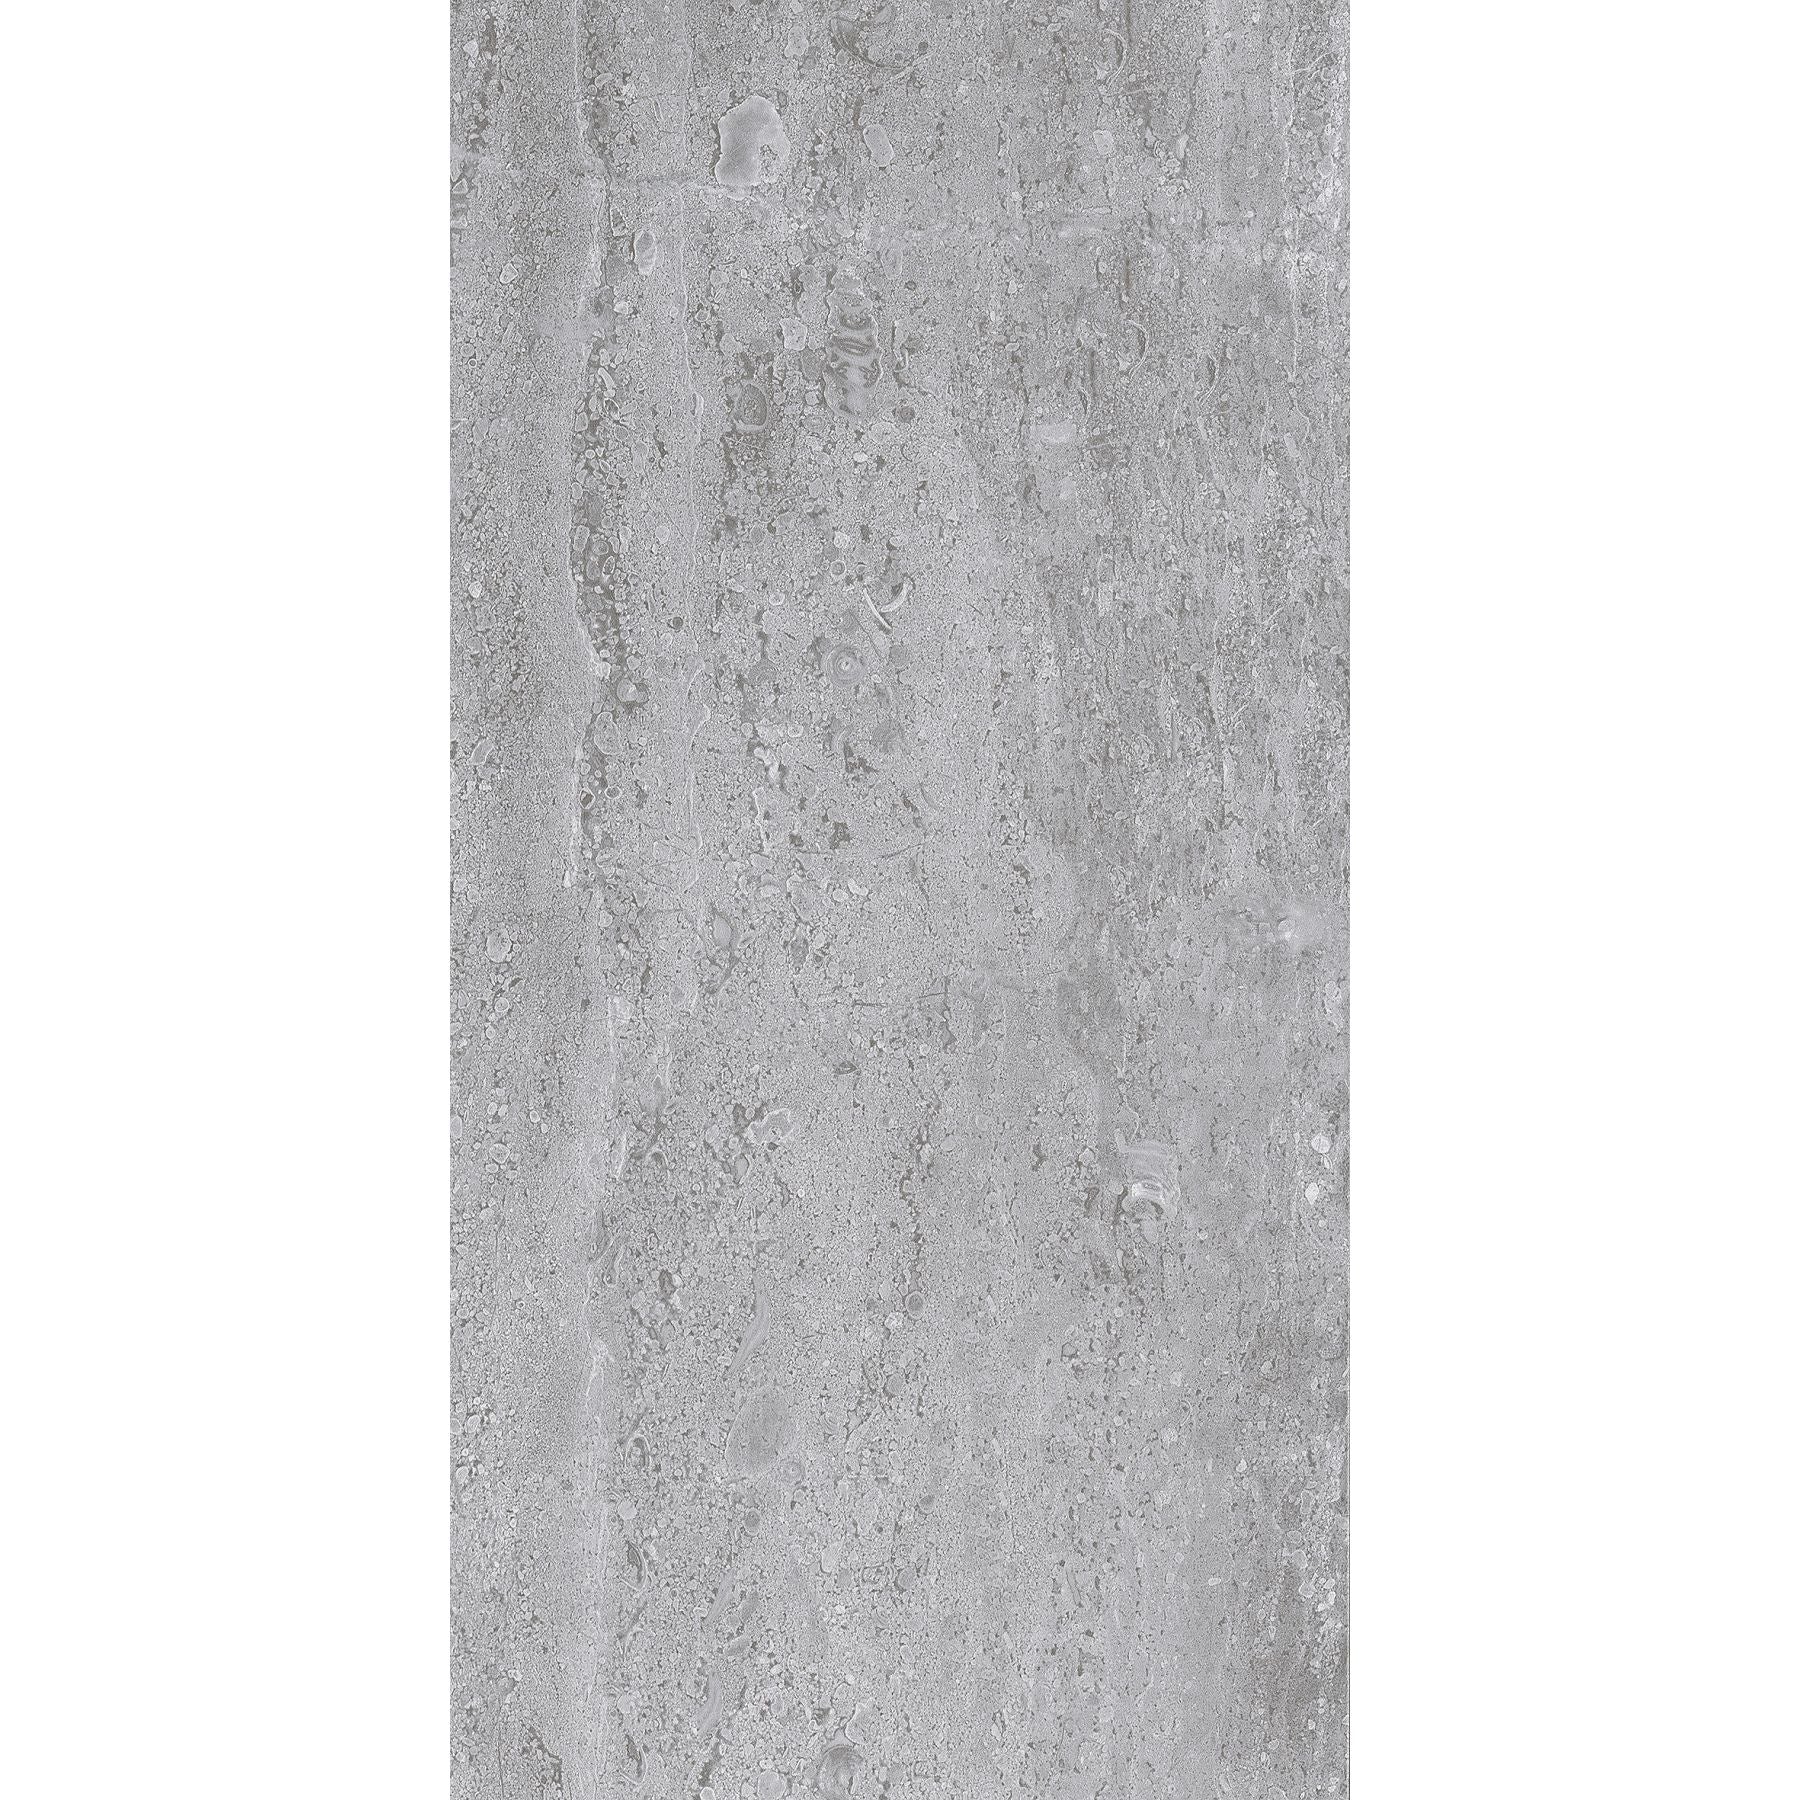 Santino Grey Ceramic Wall Tile - 30 x 60cm